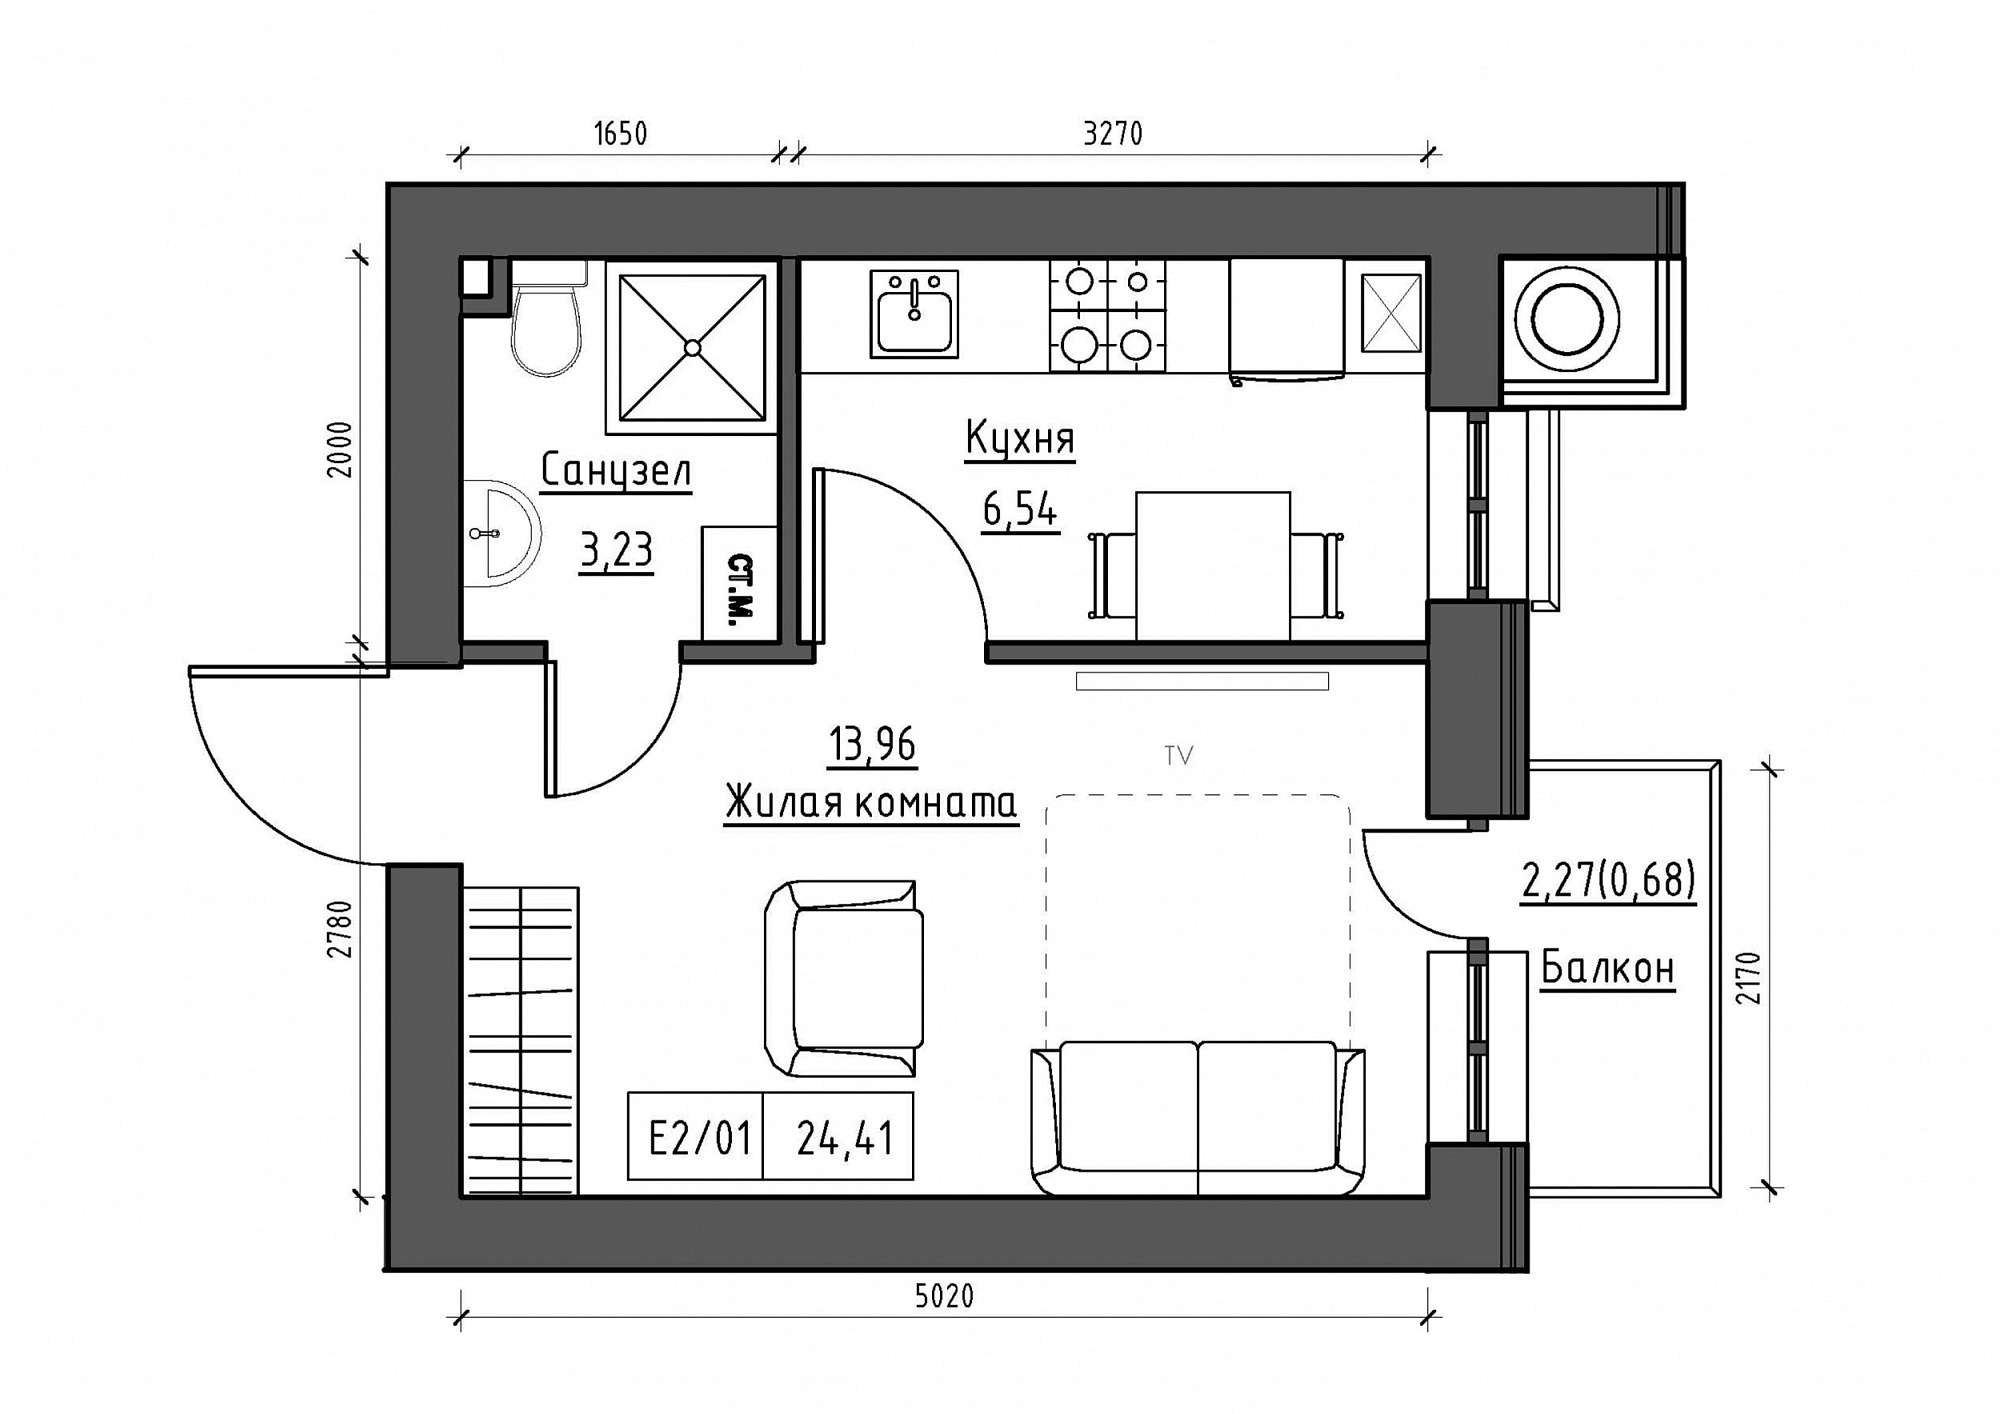 Planning 1-rm flats area 24.41m2, KS-011-03/0007.